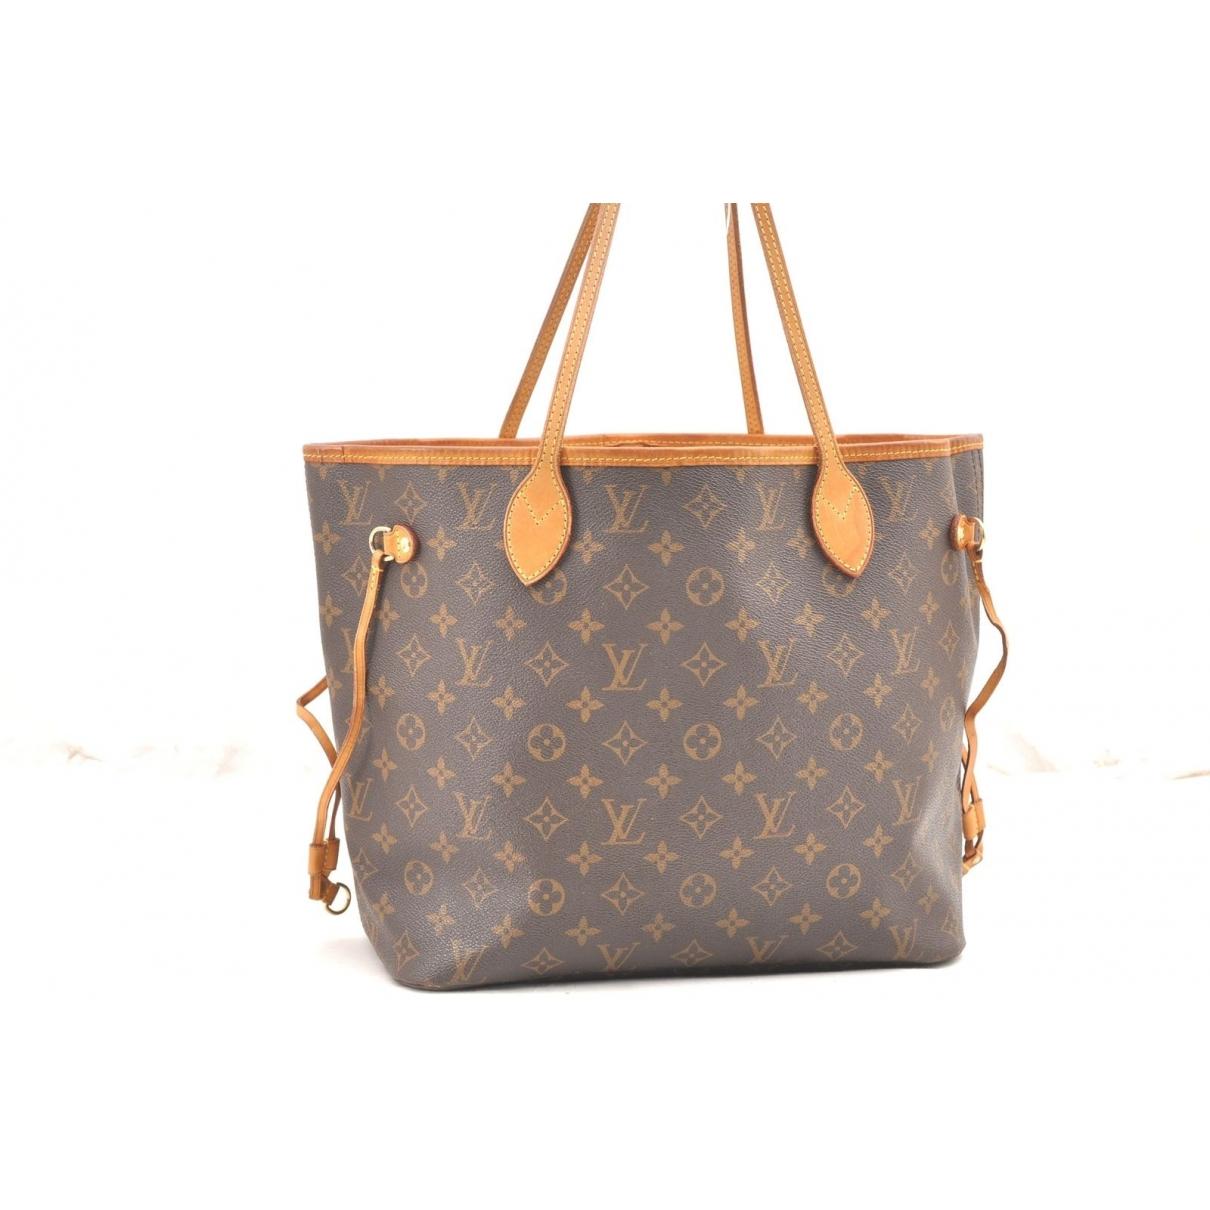 Lyst - Louis Vuitton Neverfull Brown Cloth Handbag in Brown - Save 1%